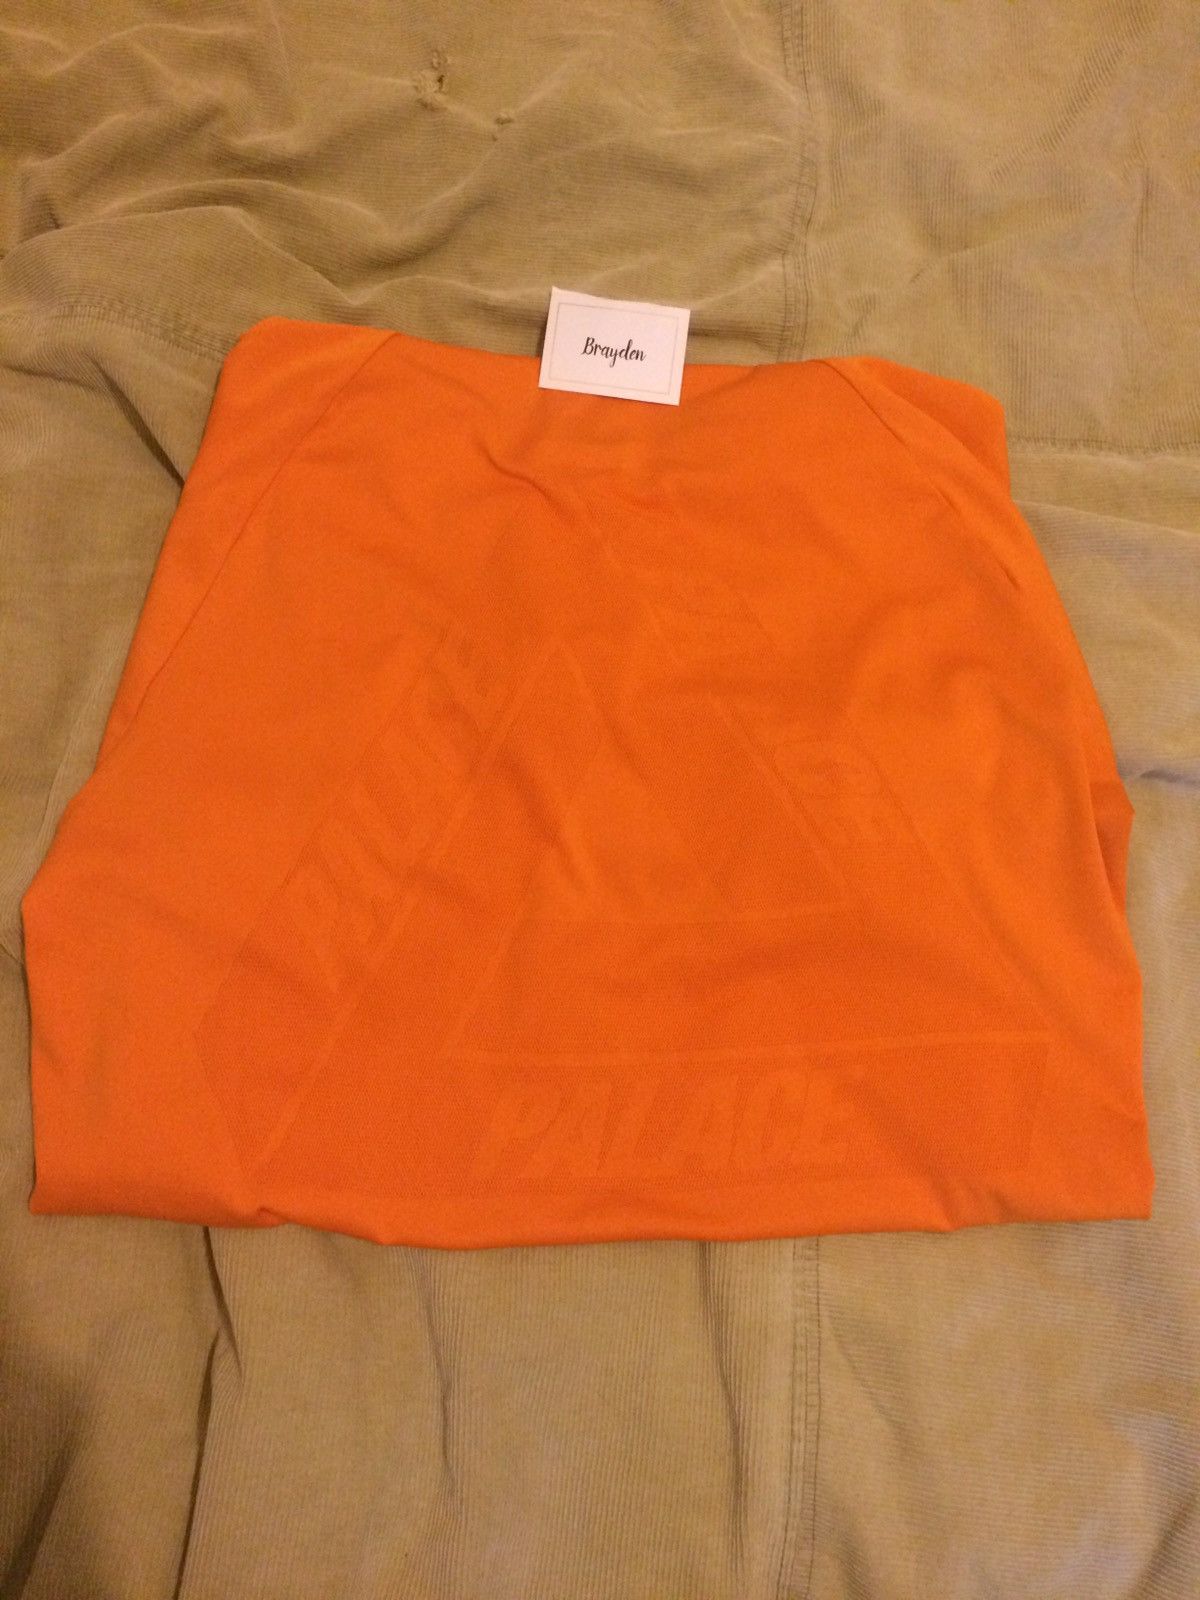 Adidas Orange Palace x Adidas Shirt Size US XL / EU 56 / 4 - 2 Preview